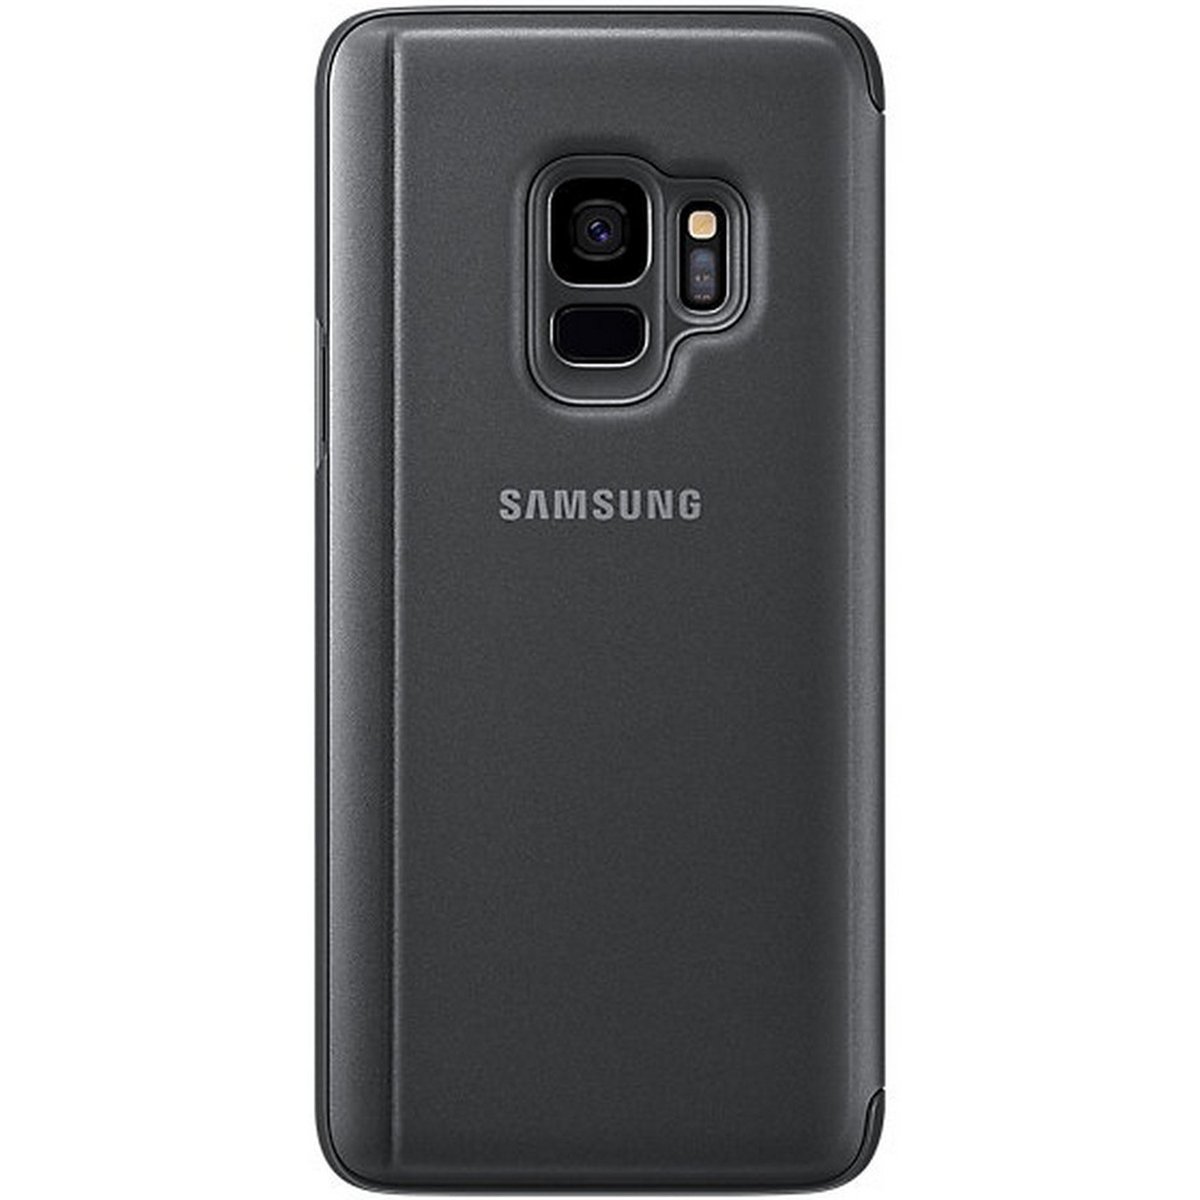 Samsung Galaxy S9 Clear View Standing Cover Black EF-ZG960CBEGWW